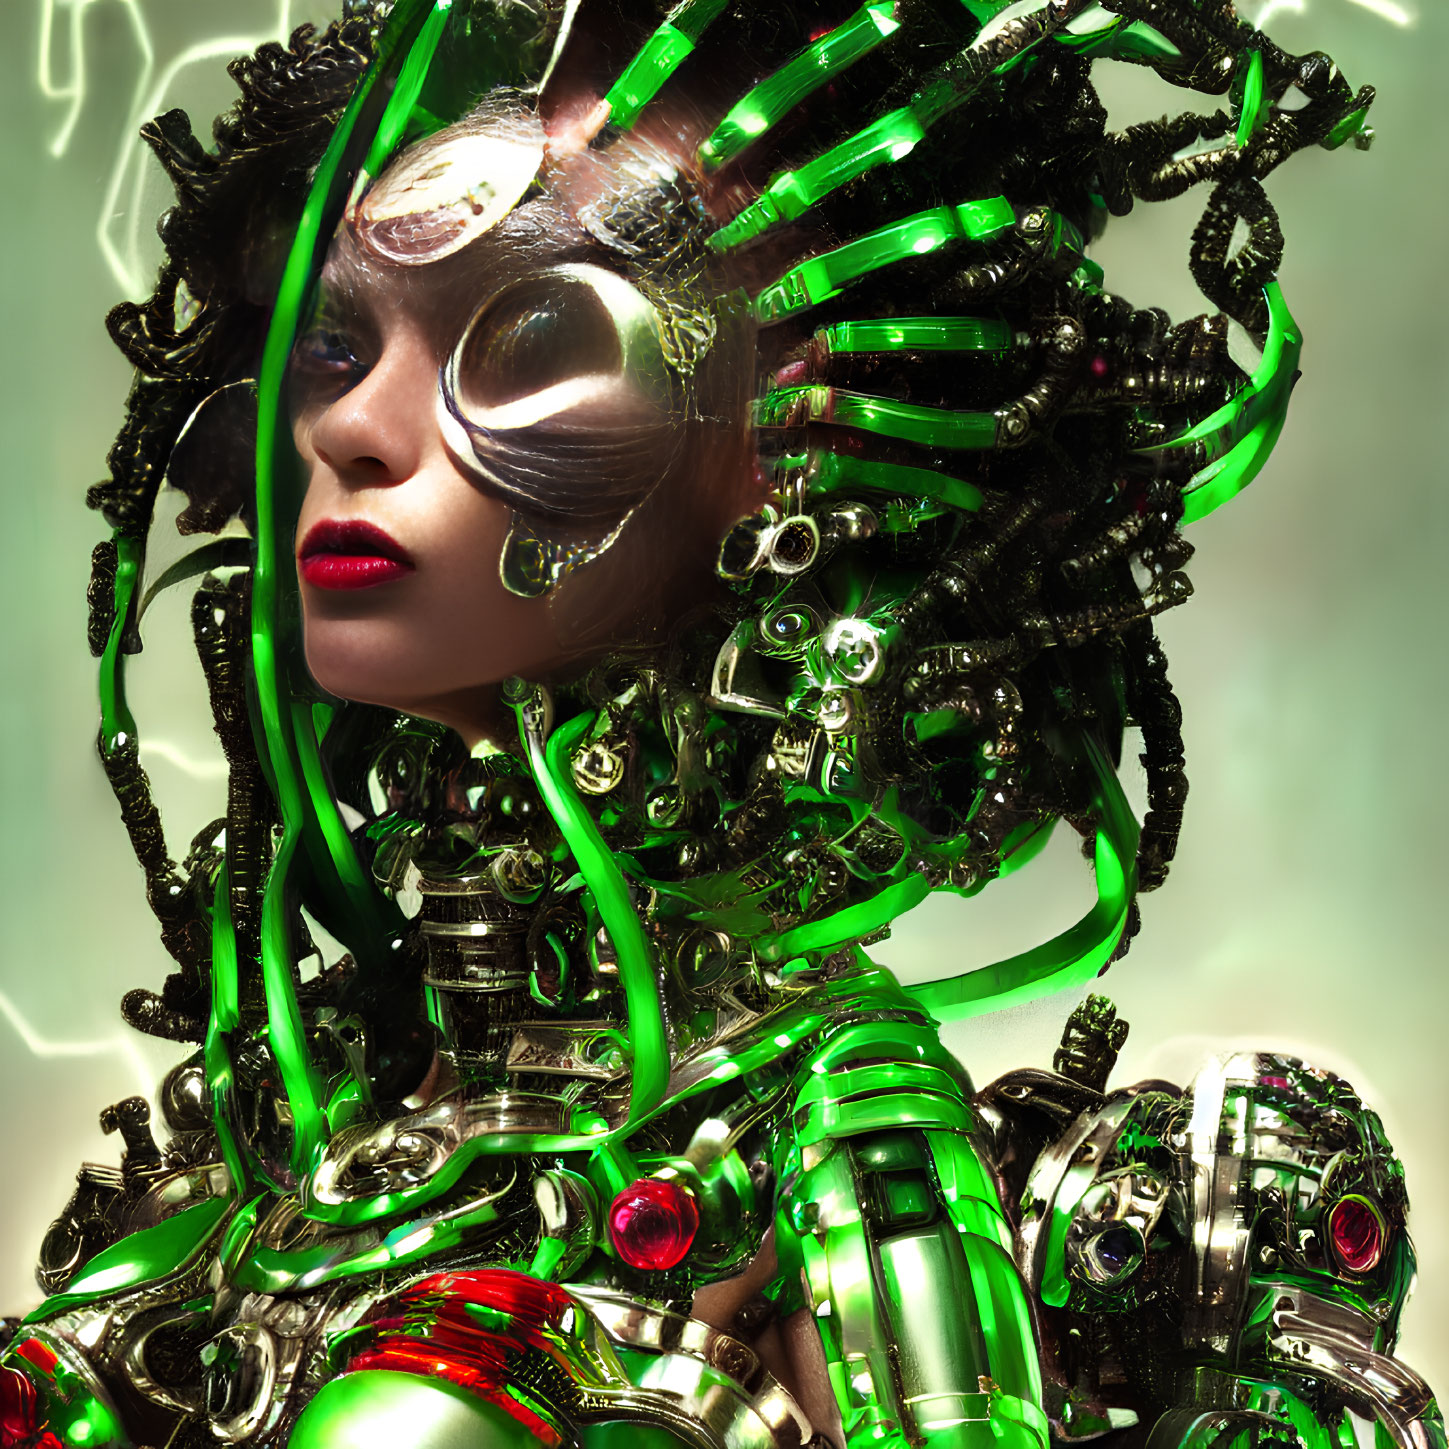 Futuristic cyborg with green tubing and metallic mask in glowing lights